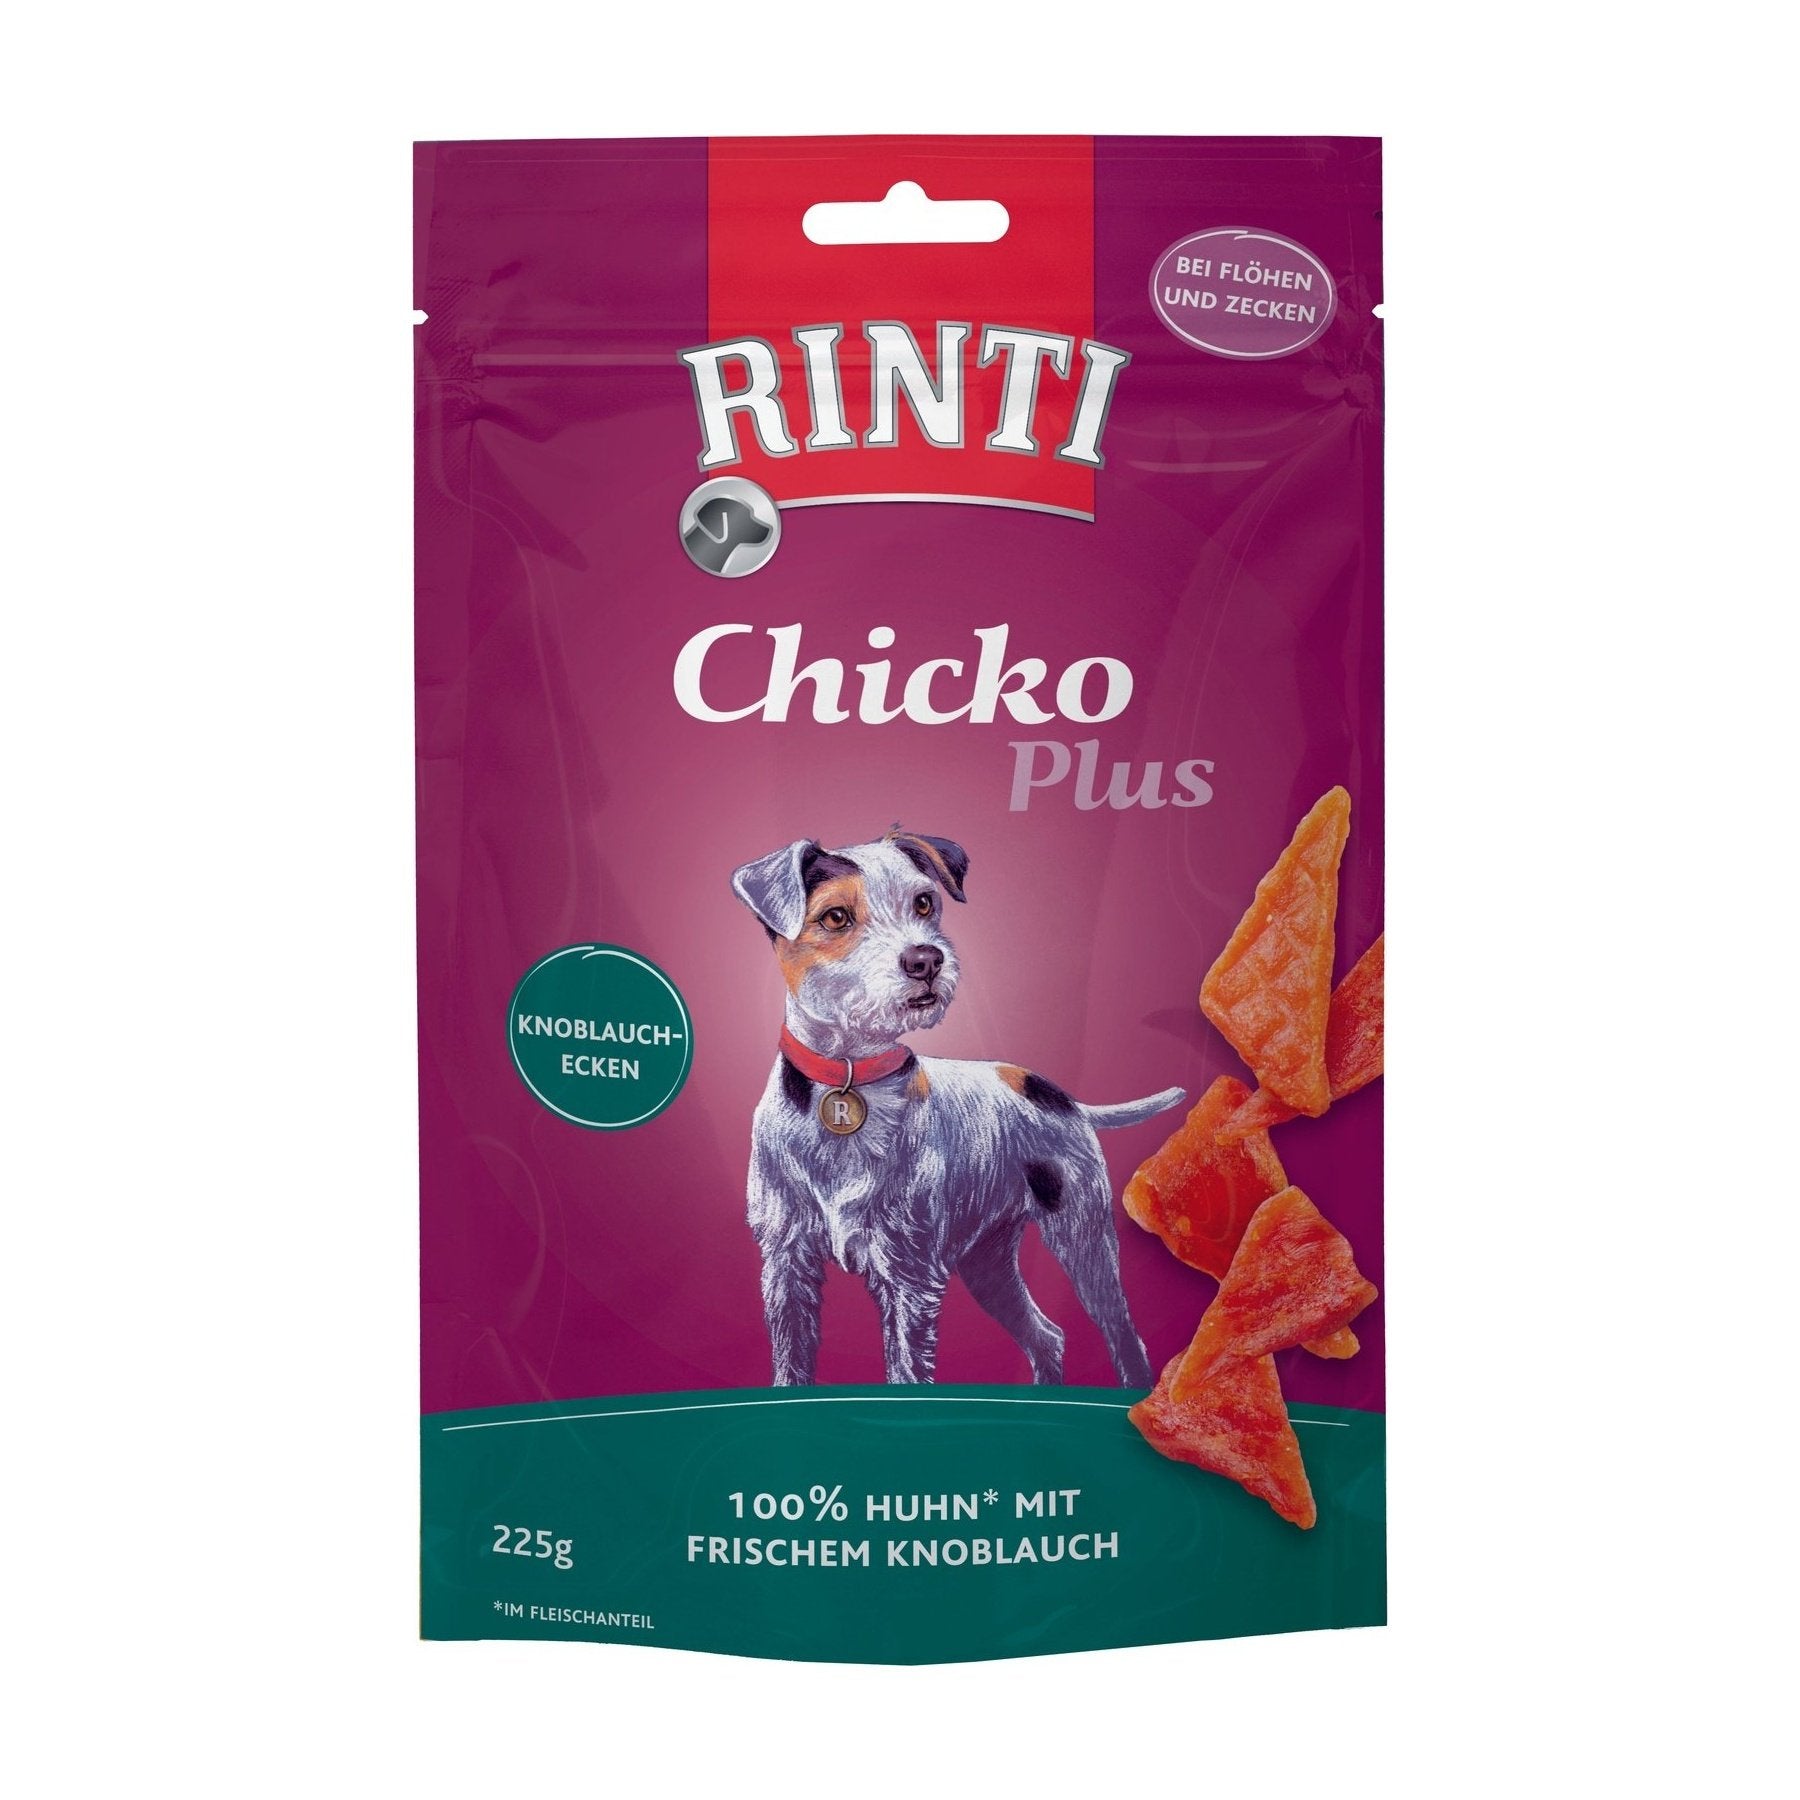 Rinti Chicko Plus Knoblauchecken - zoo.de